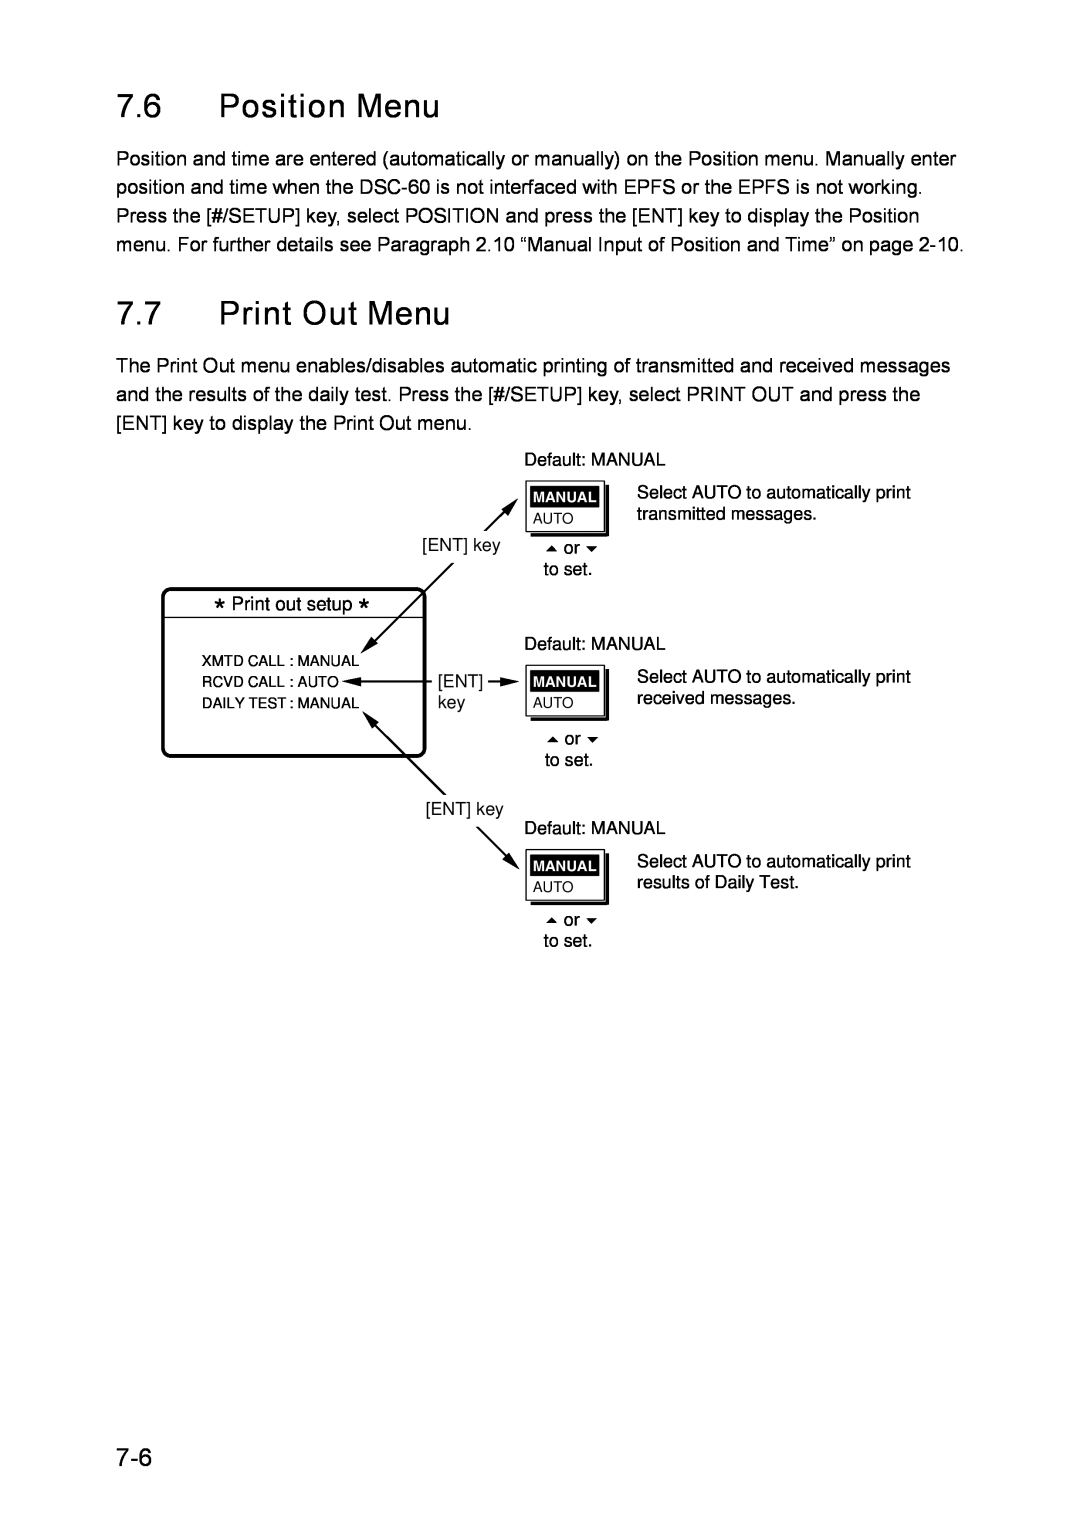 Furuno RC-1500-1T manual Position Menu, Print Out Menu, Print out setup 